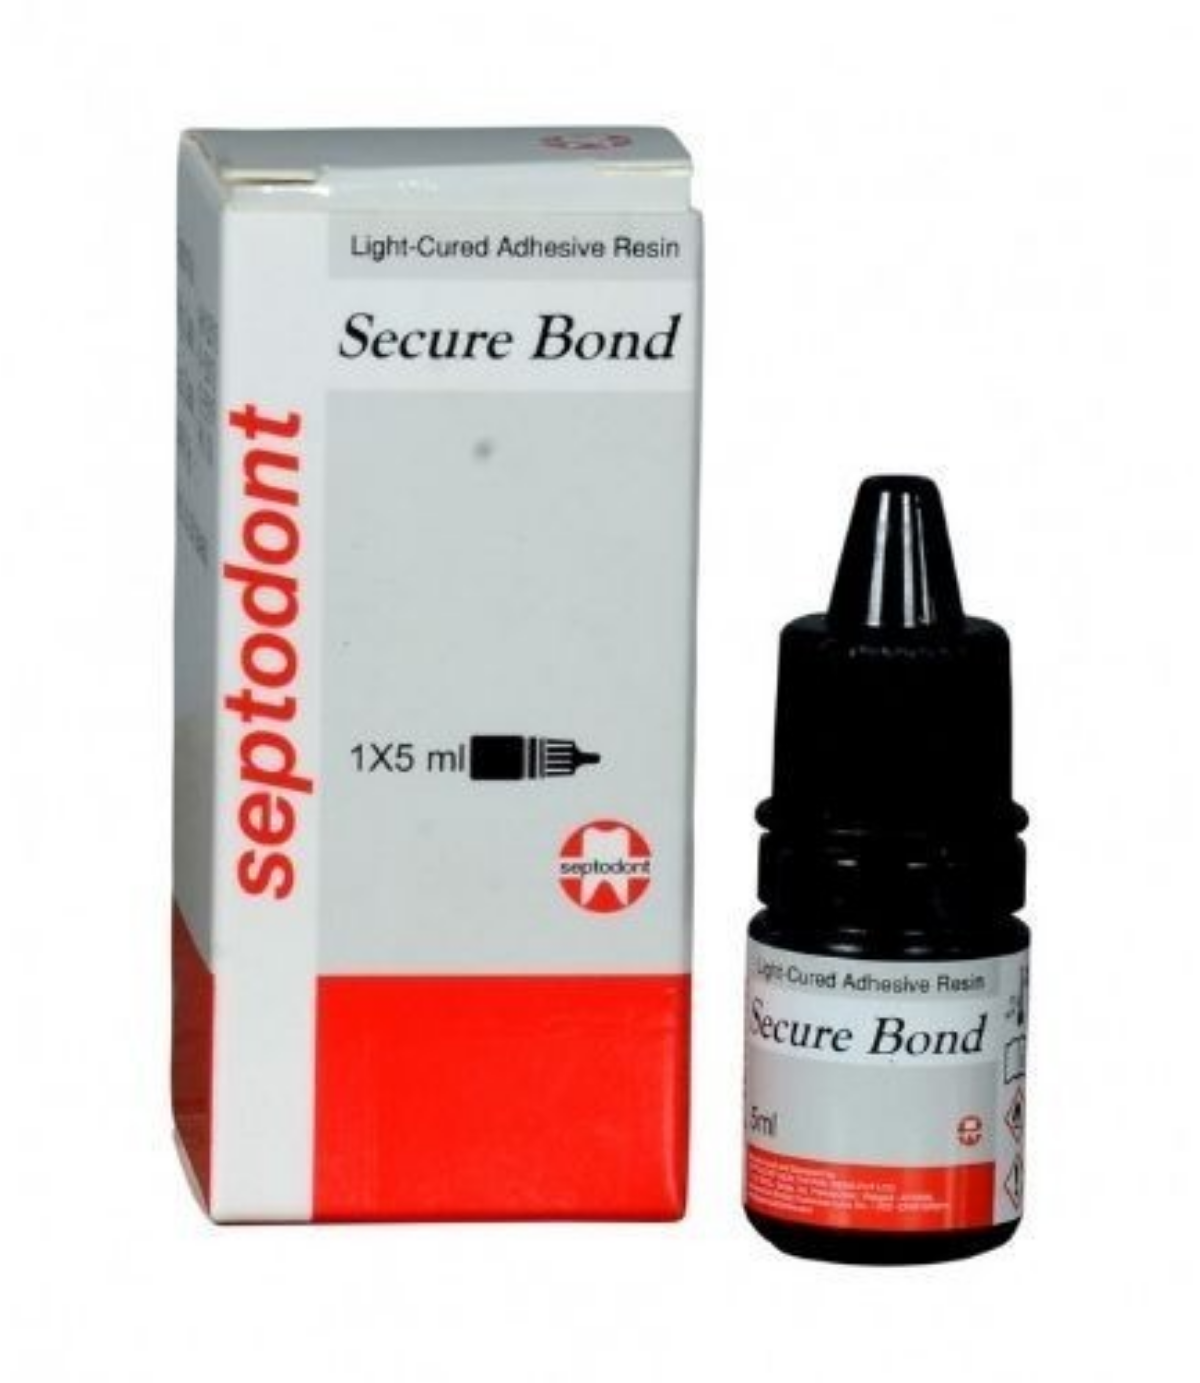 Septodont Secure Bond 5ml Bond (Dental Light-Cured Adhesive Resin Material)